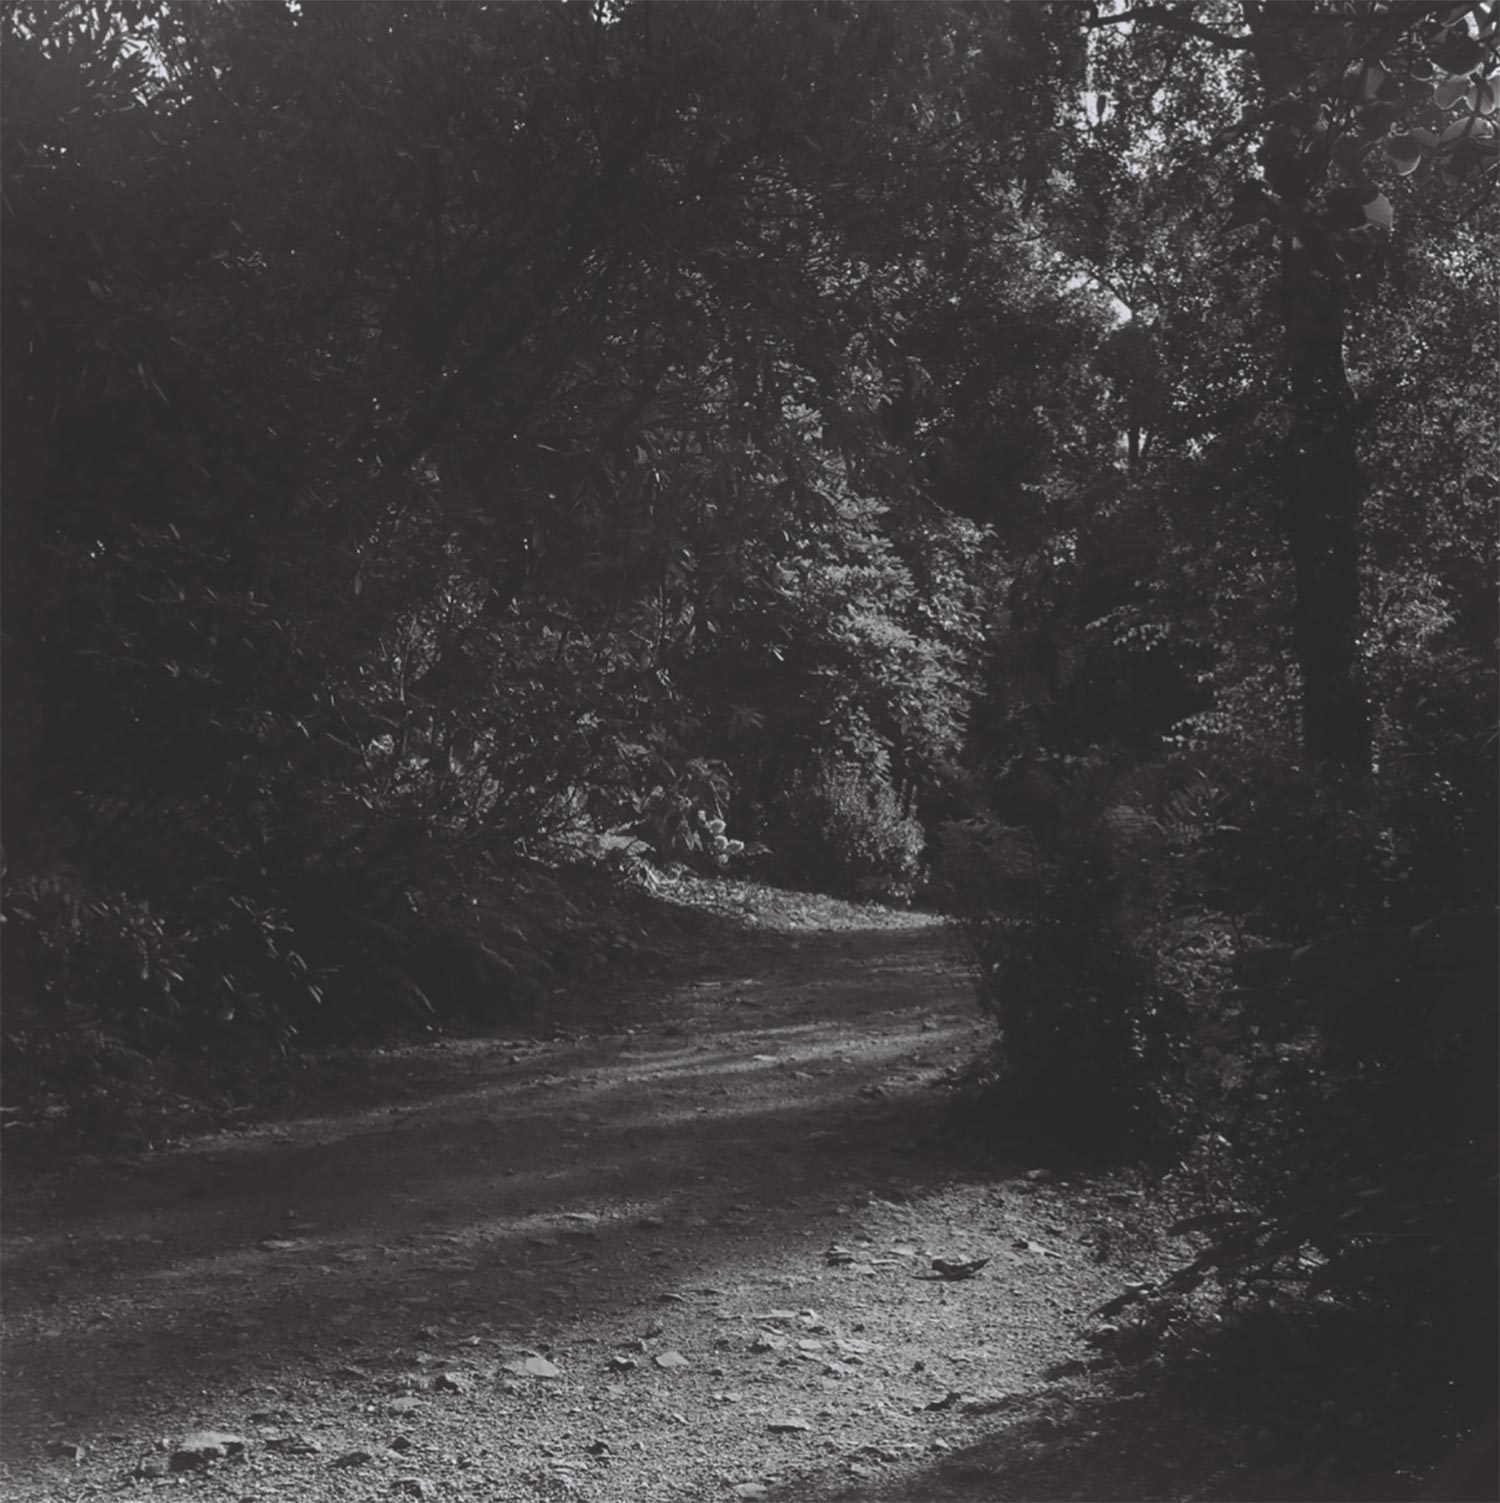 Toby Blackman, The Path (2019), The Hunter’s Path, Teign Gorge (6x6 cm negative)